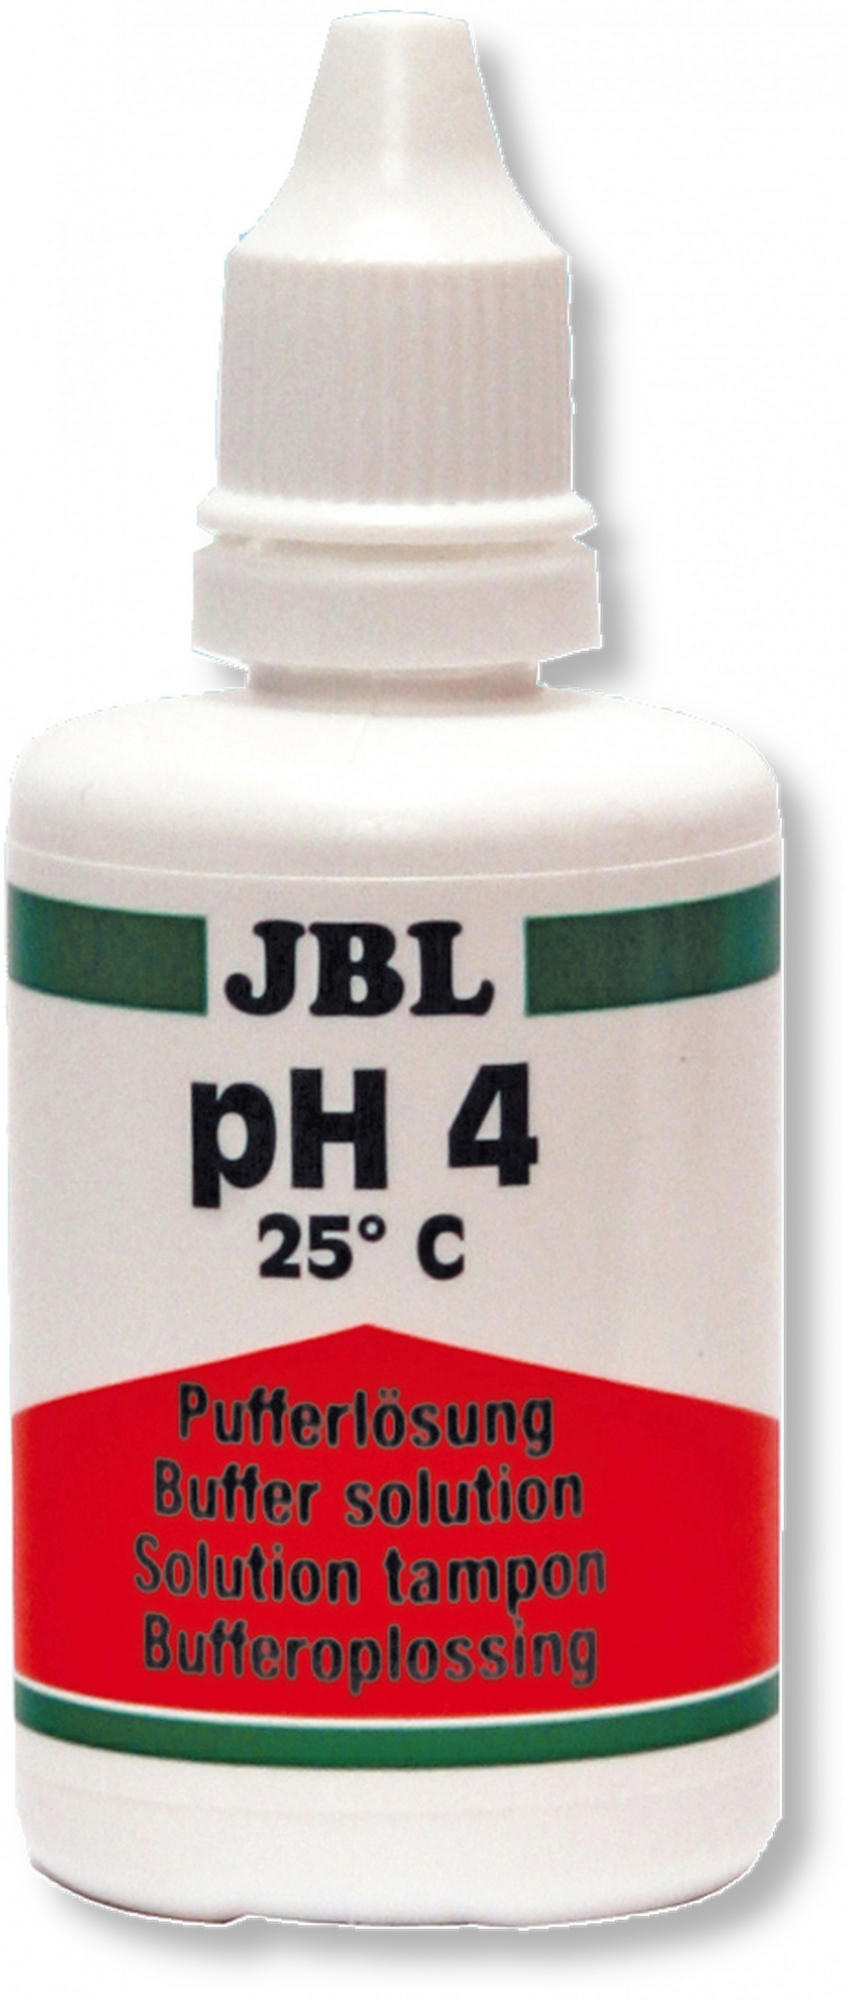 JBL Solution Tampon Standard pH 4,0 en 7,0